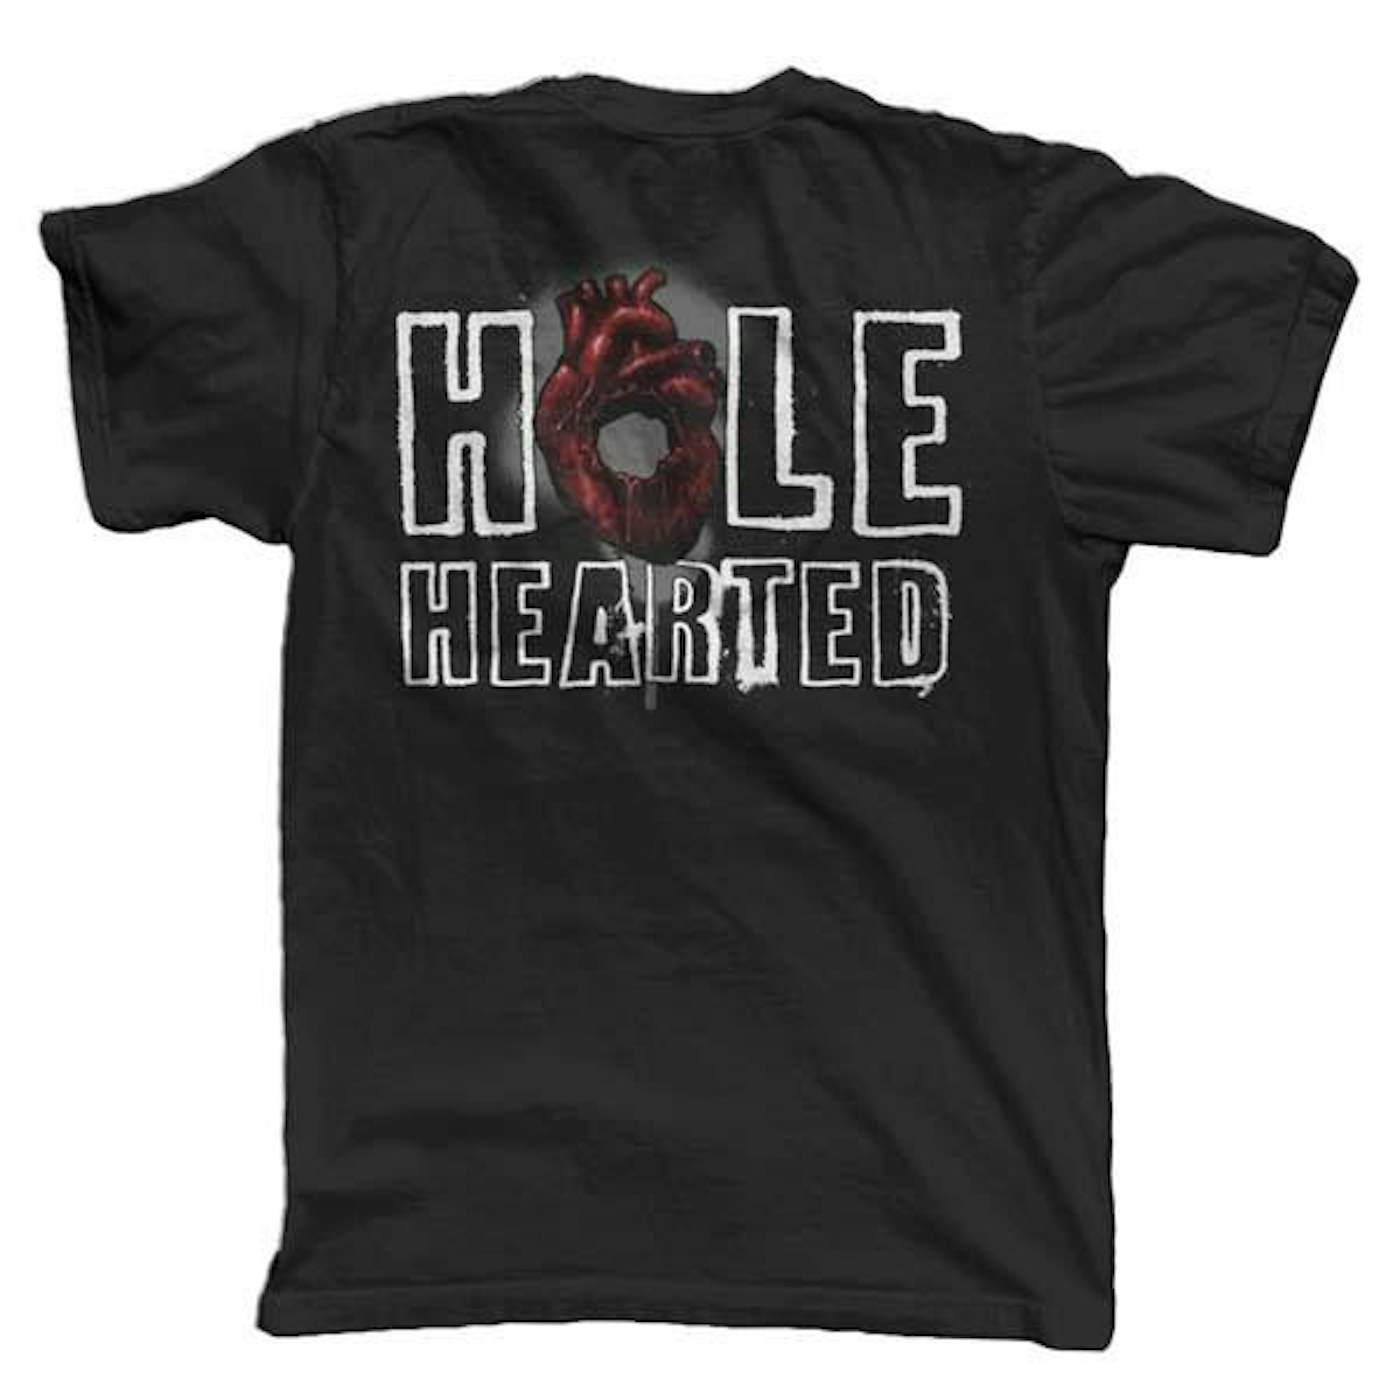 Extreme Black Hole Hearted T-Shirt